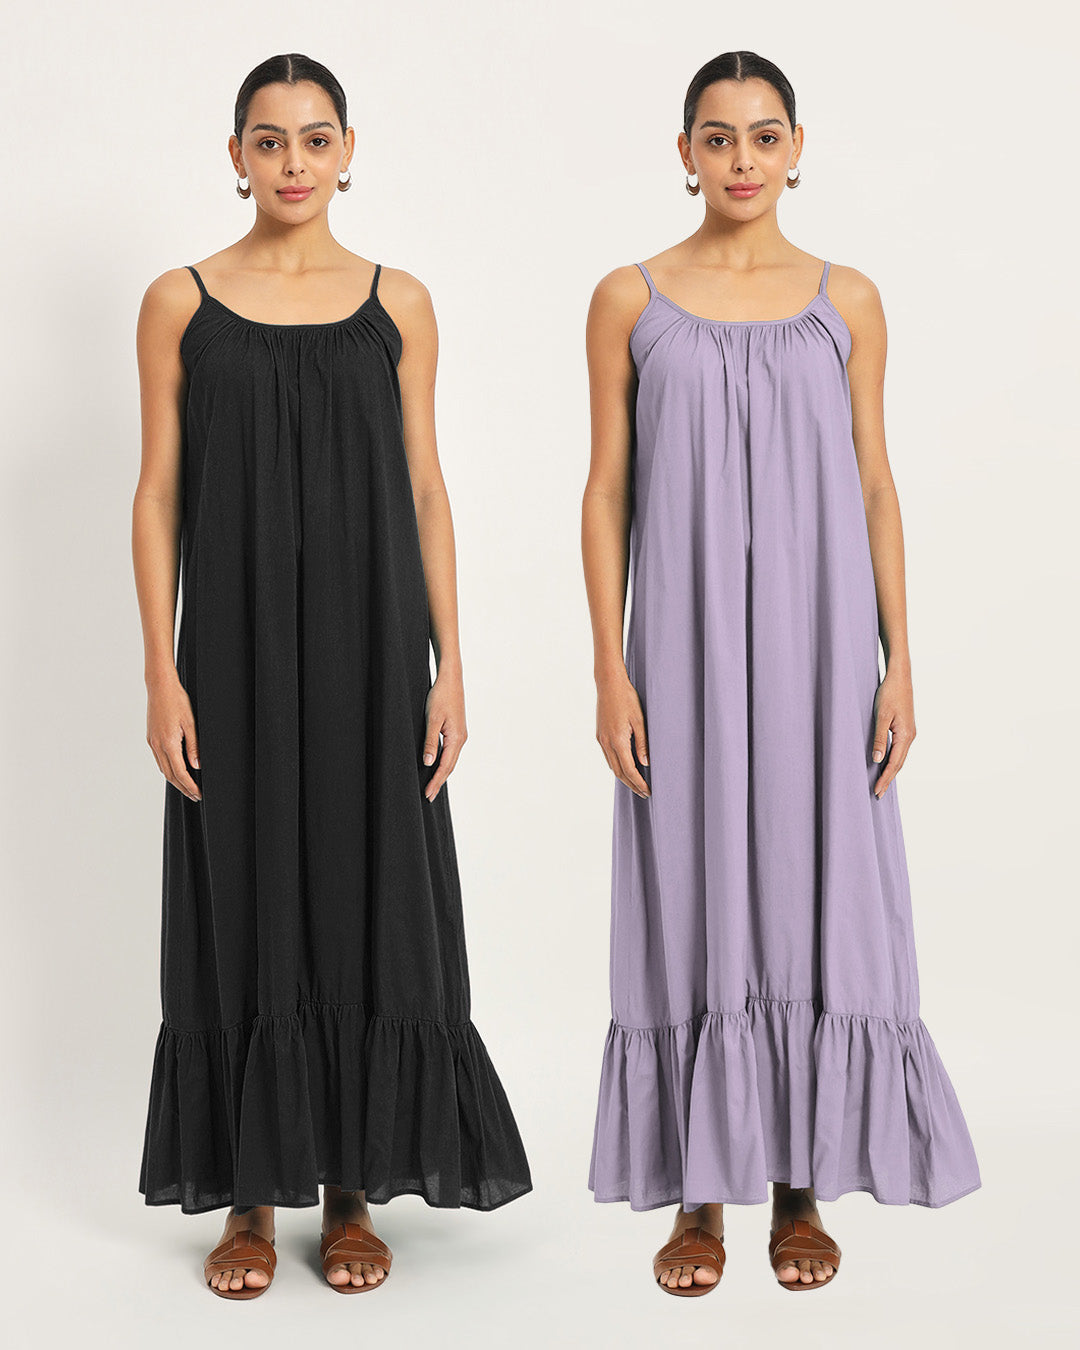 Combo - Classic Black & Lilac Night-to-Town Nightdress